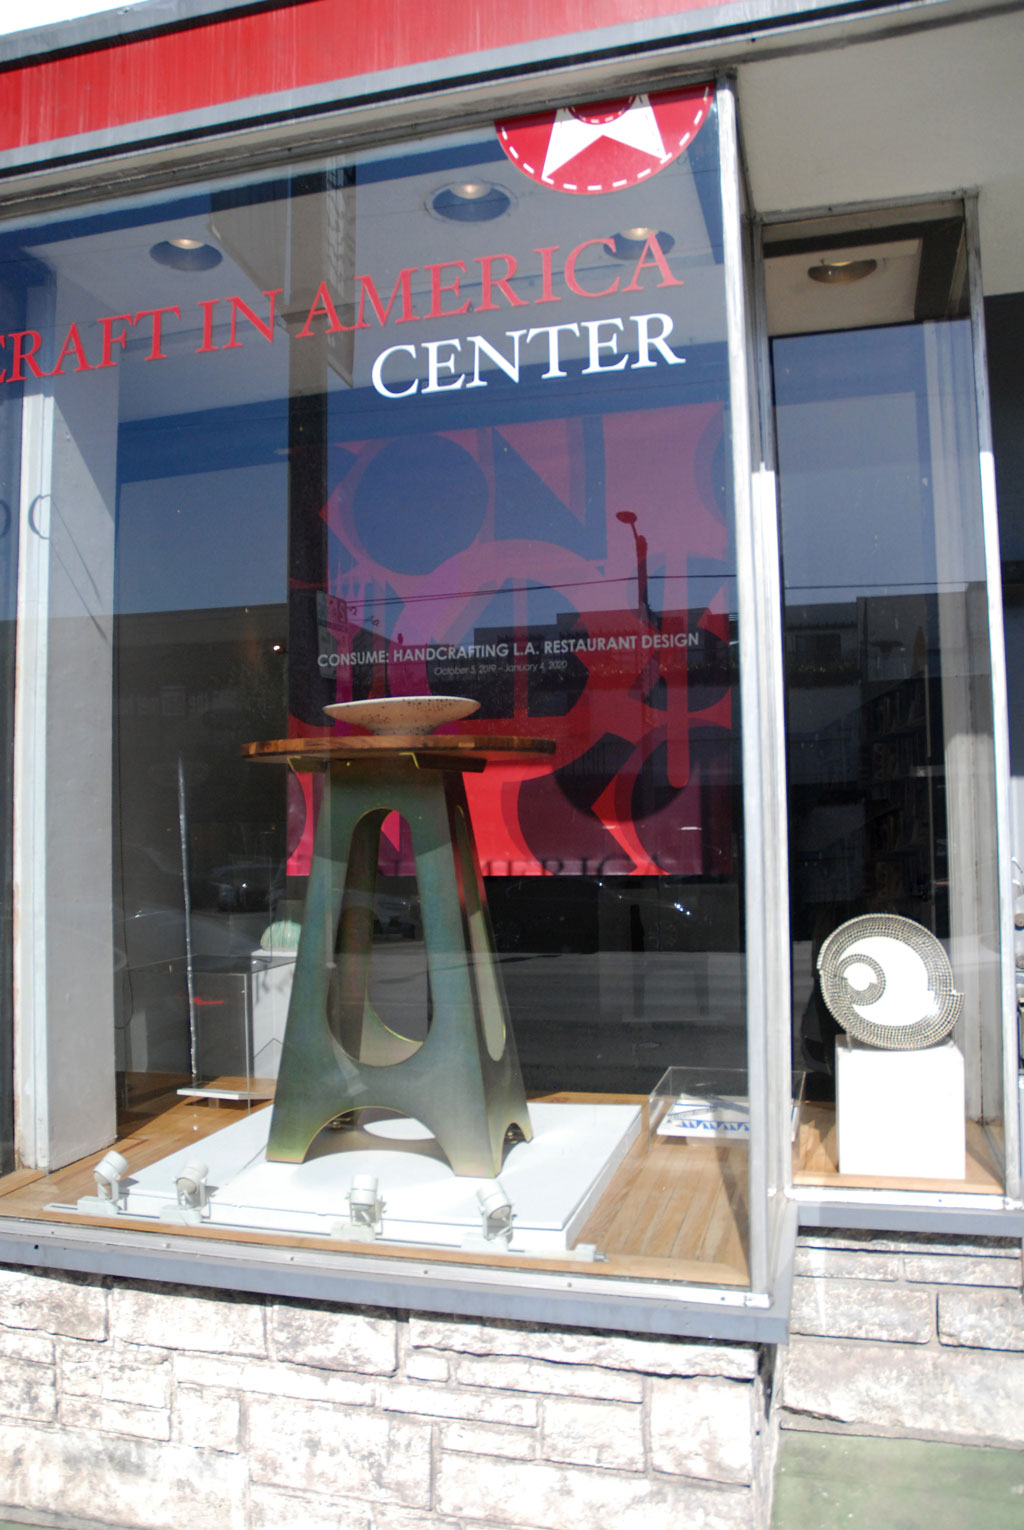 Consume: Handcrafting L.A. Restaurant Design exhibition window, Craft in America